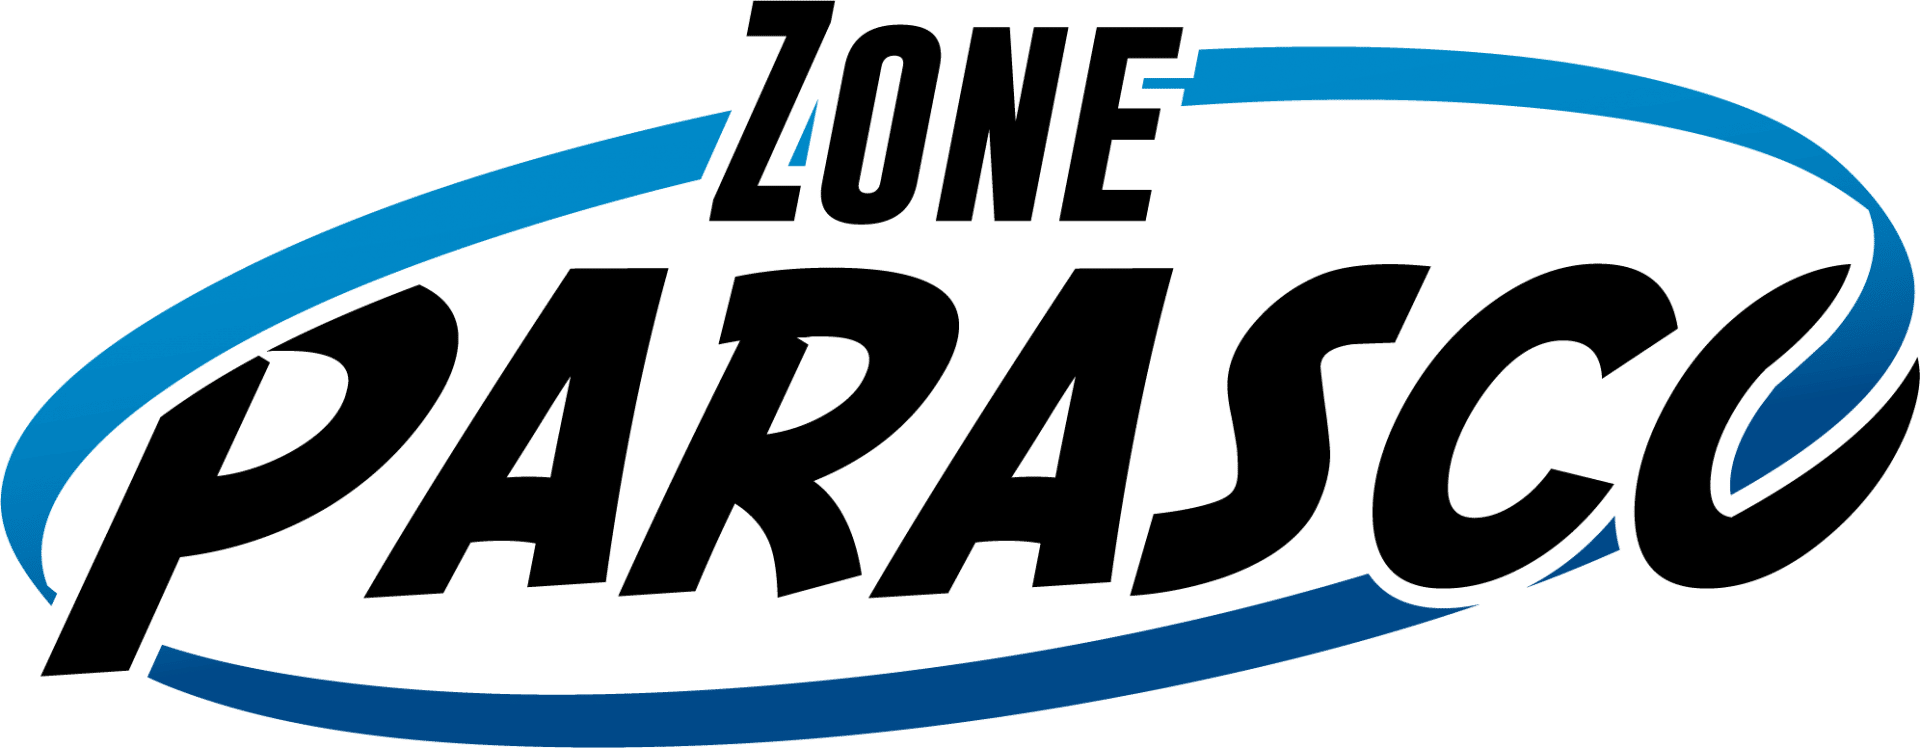 Zone Parasco